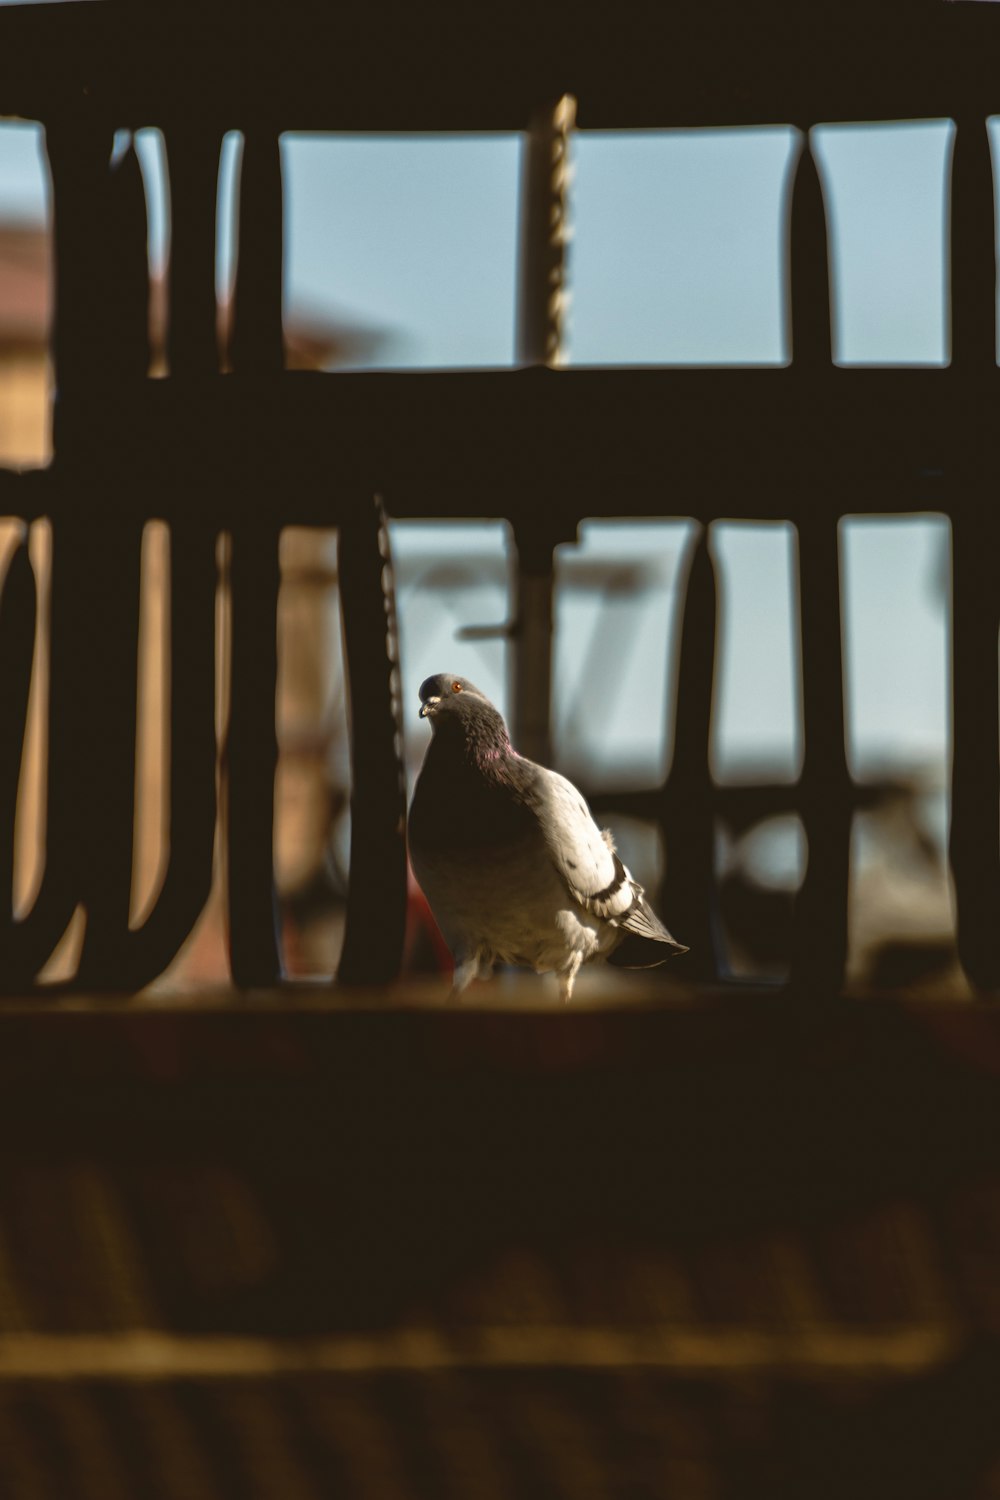 a bird on a railing